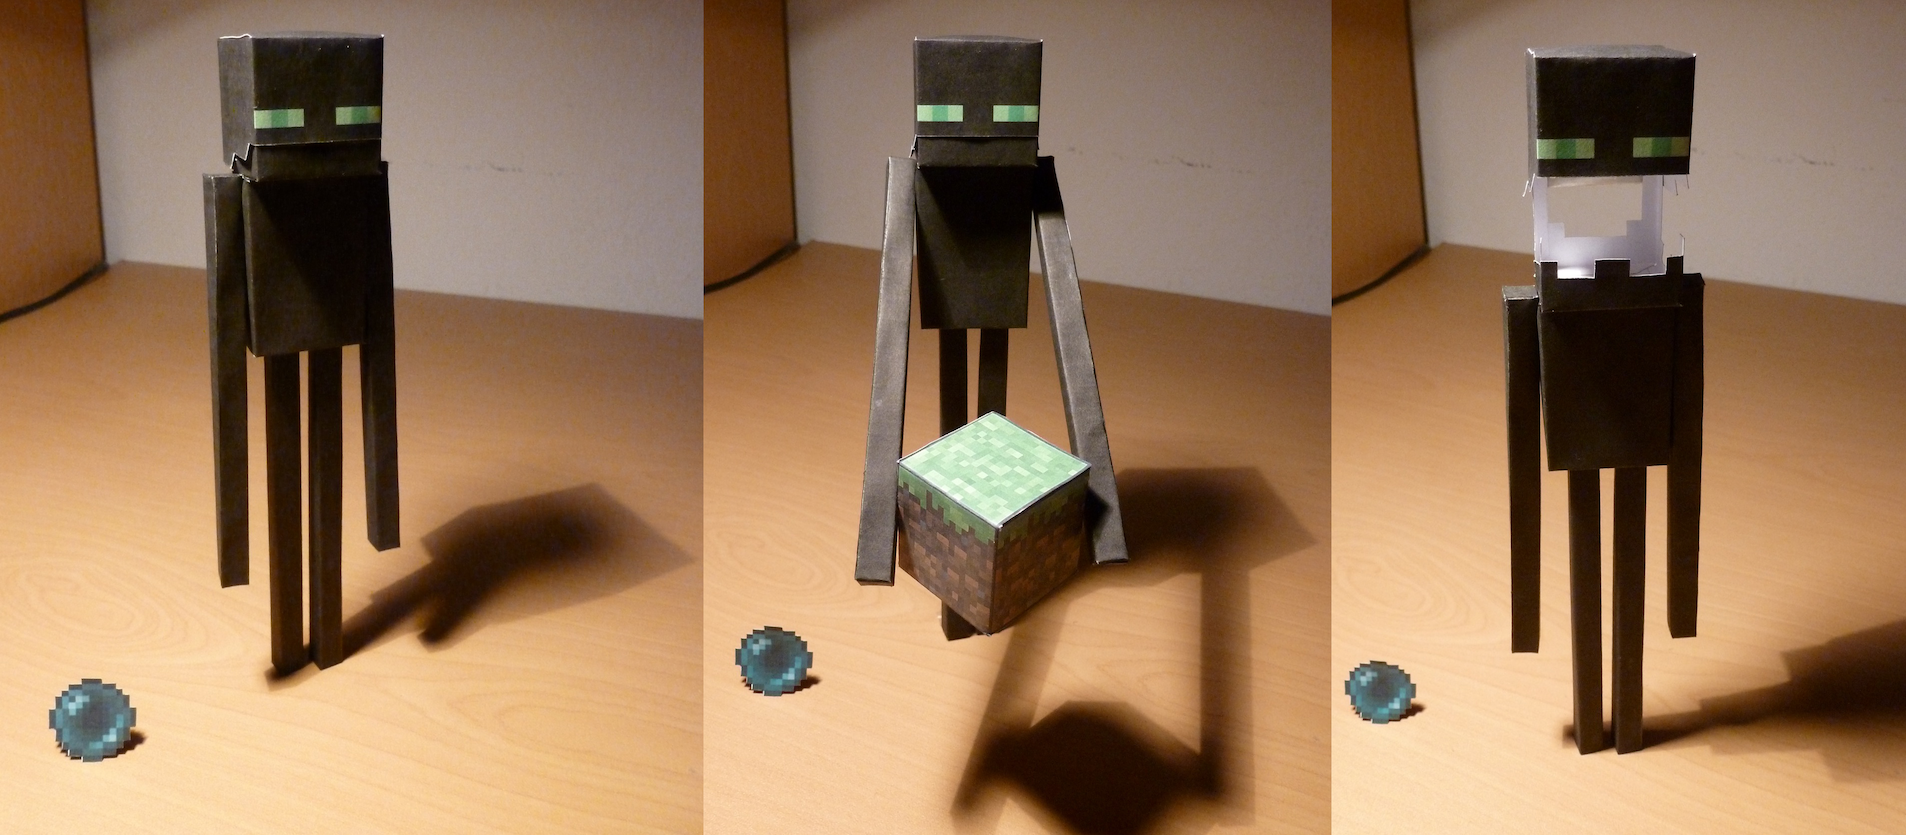 Enderman Minecraft Paper Craft Model